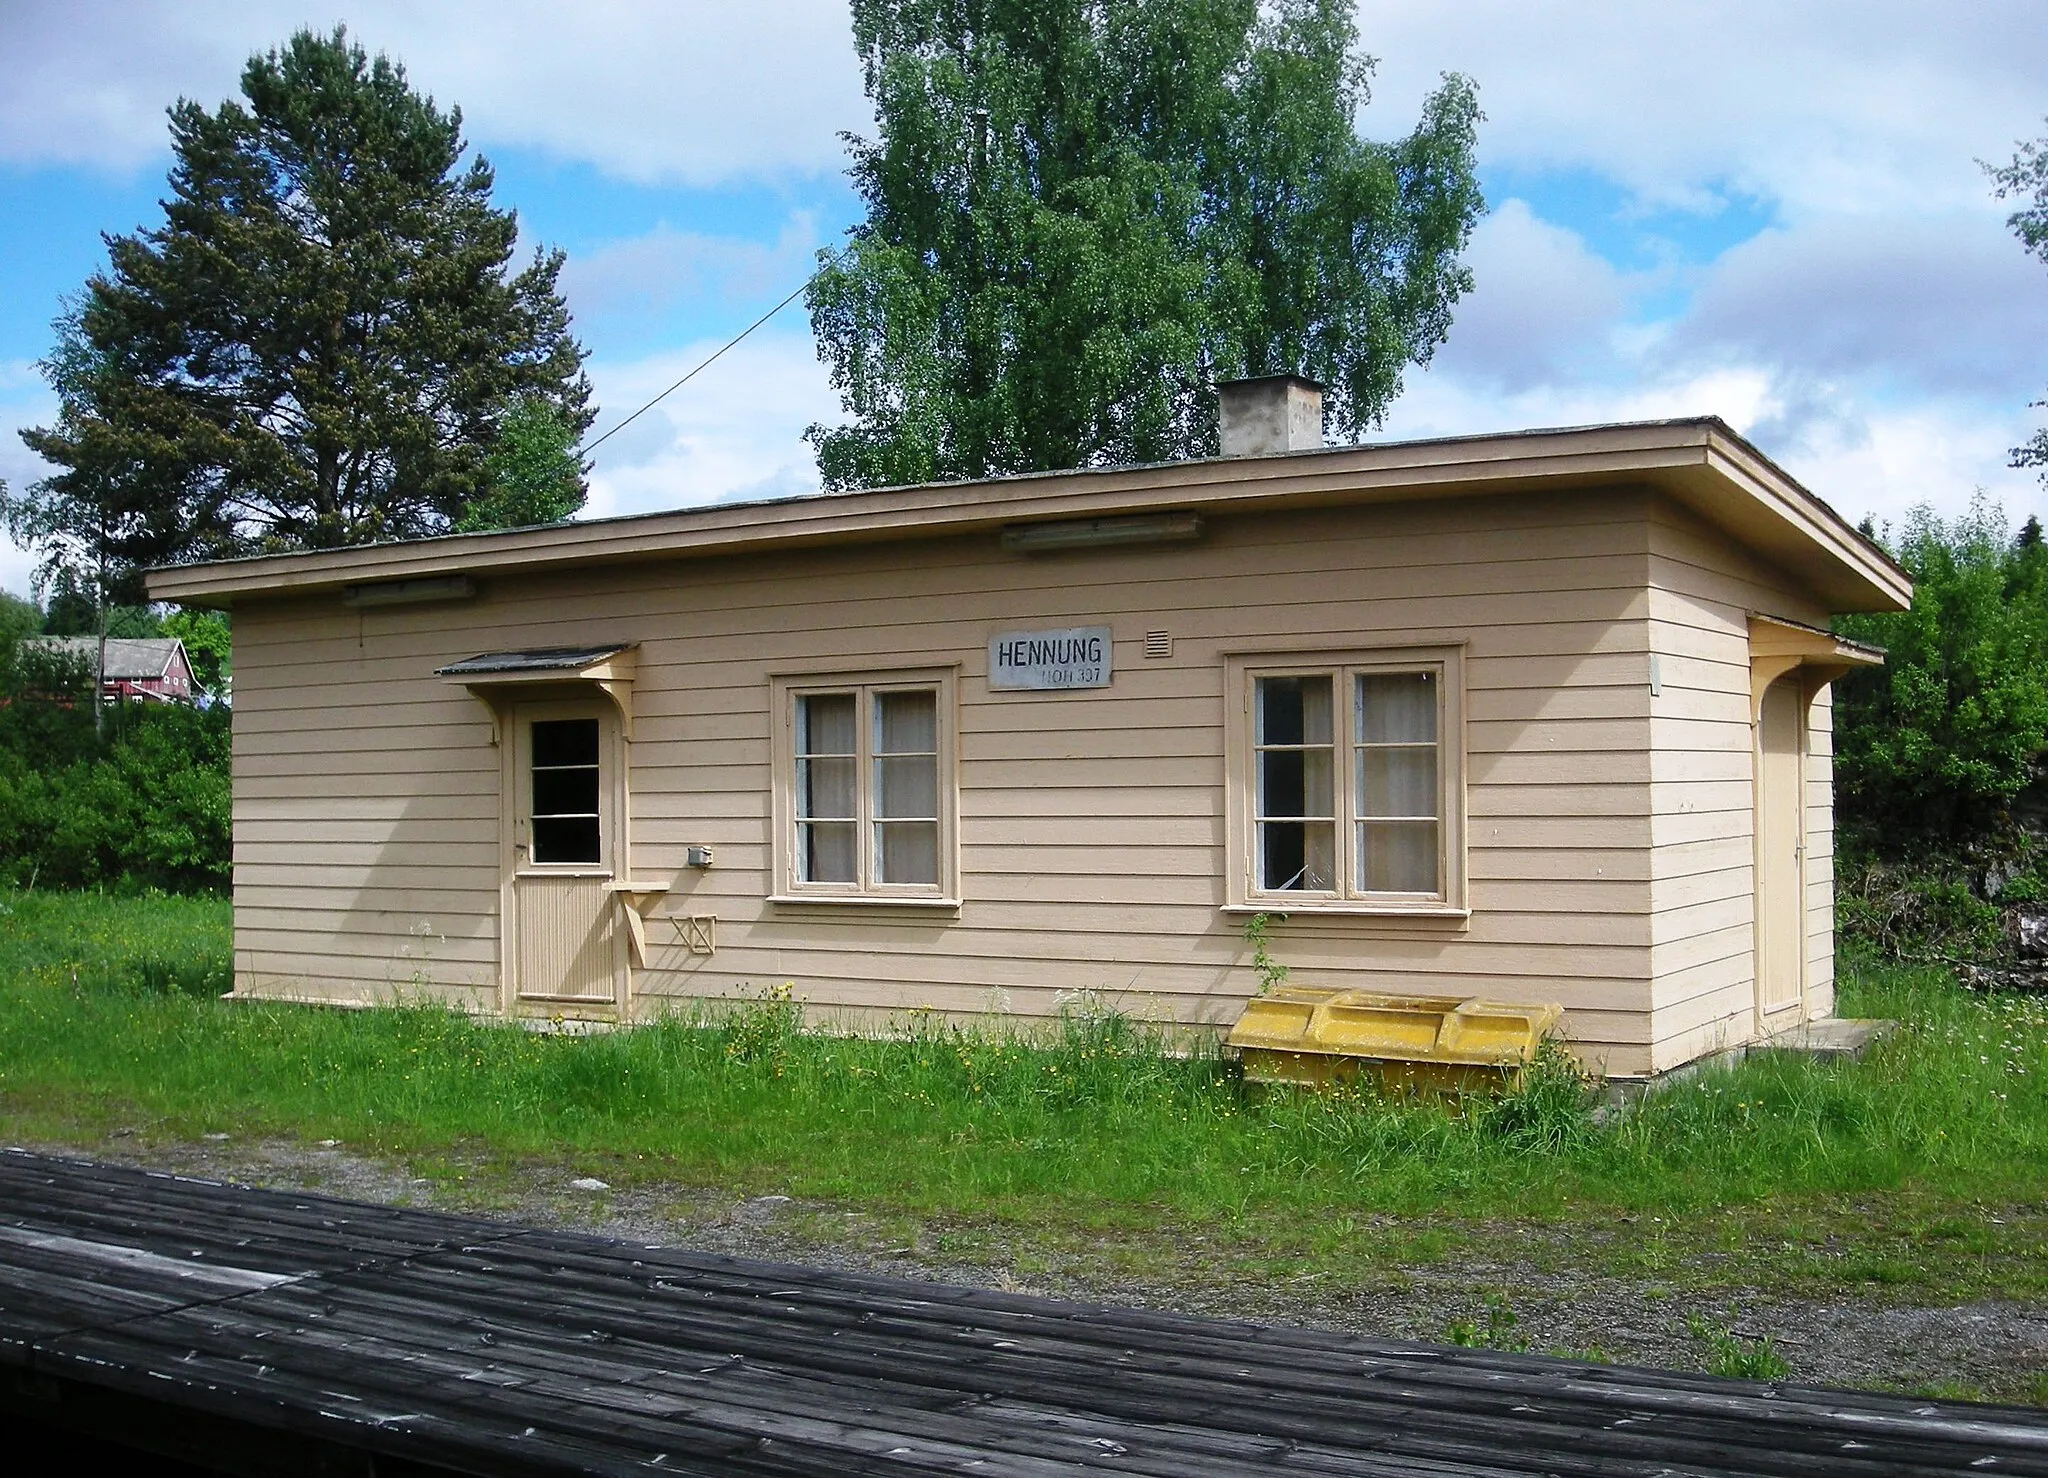 Photo showing: Hennung station on the Gjøvik line